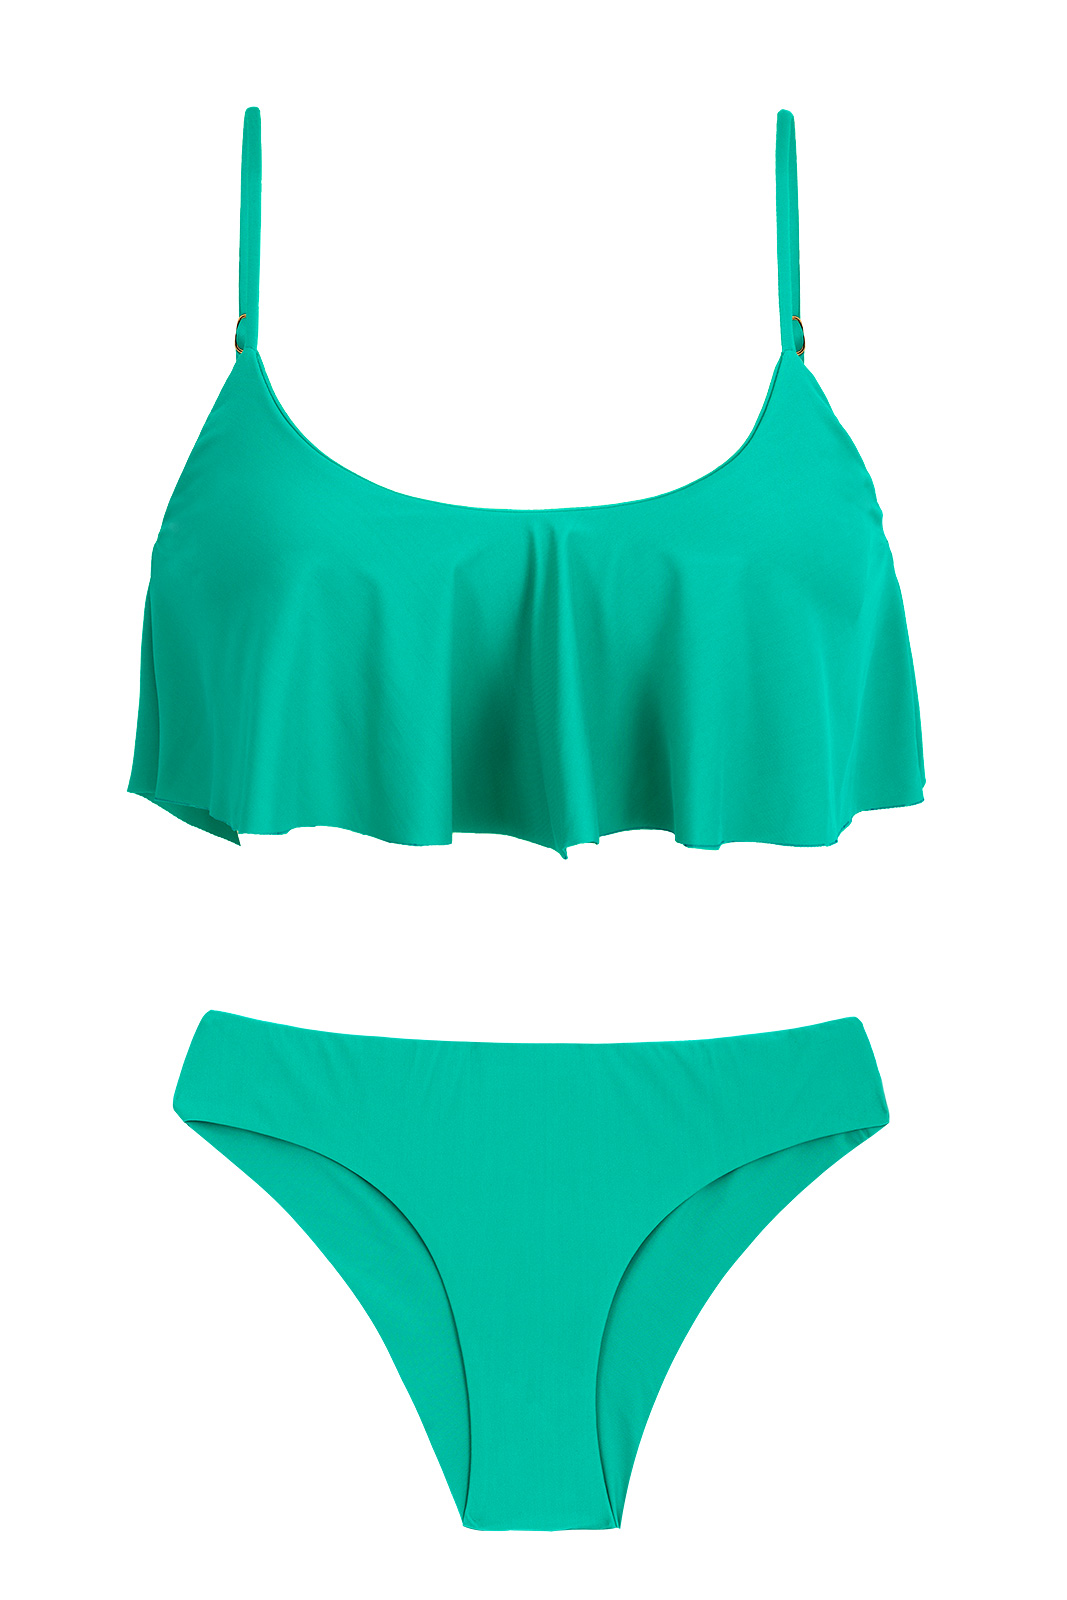 Frilled Green Bikini With Fixed Scrunch Bottom Bahamas Babado Rio